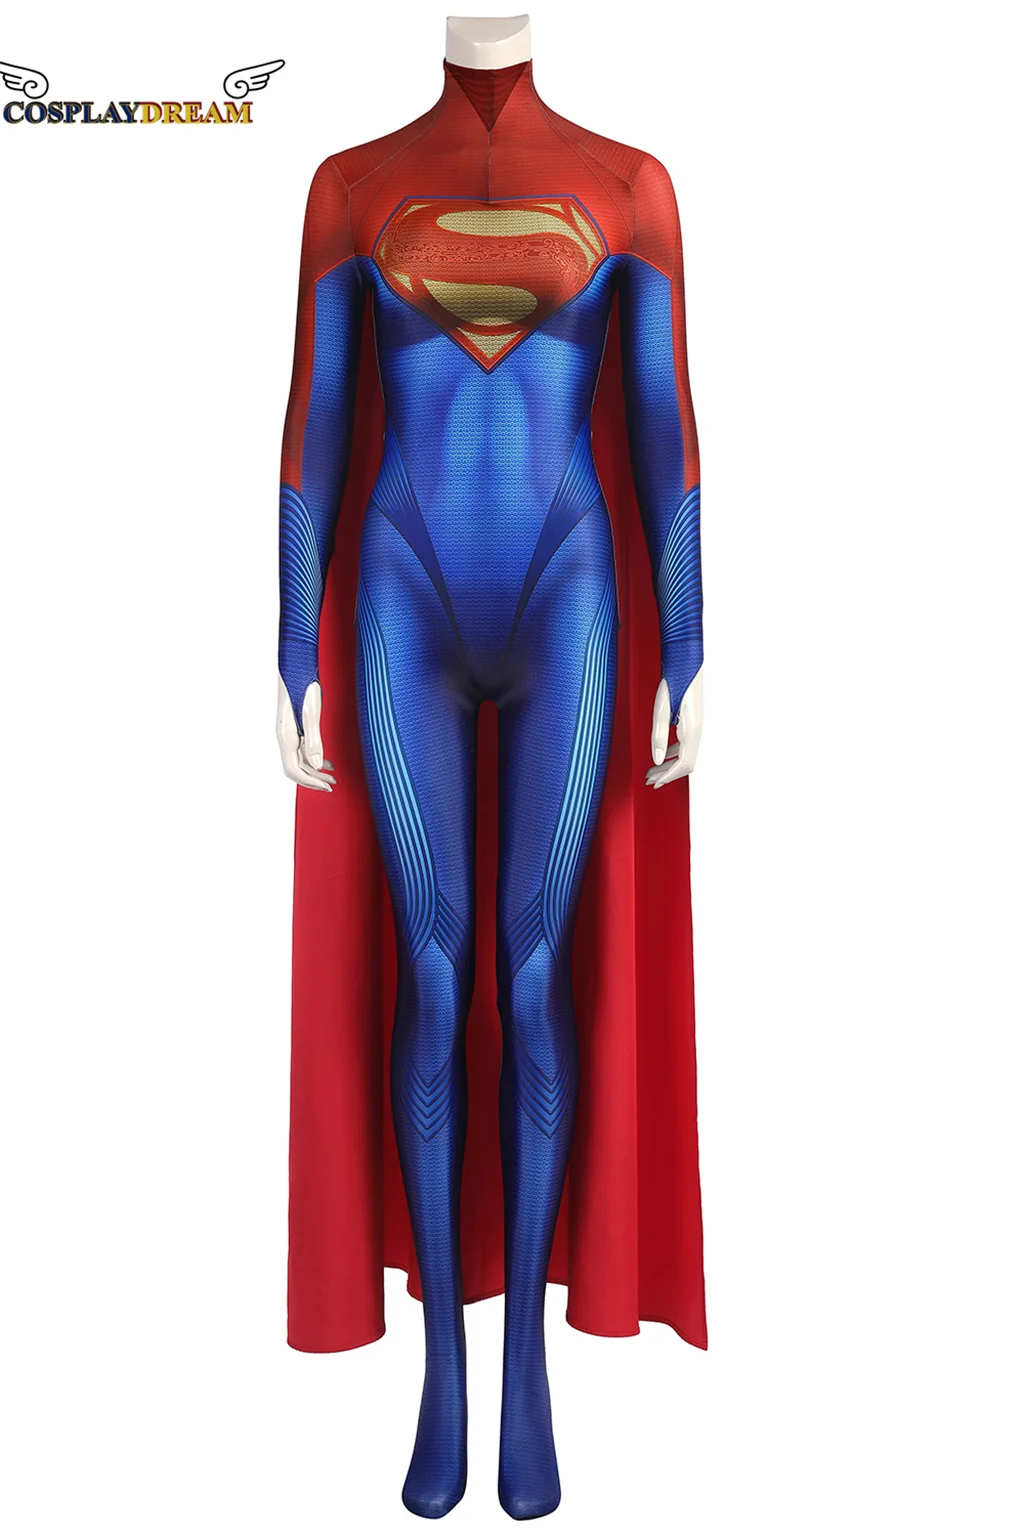 Flash Super Lady Cosplay Costume Kara Zor El Battle Jumpsuit Fantasy Halloween Outfit 3D Printed Zentai Blue Bodysuit